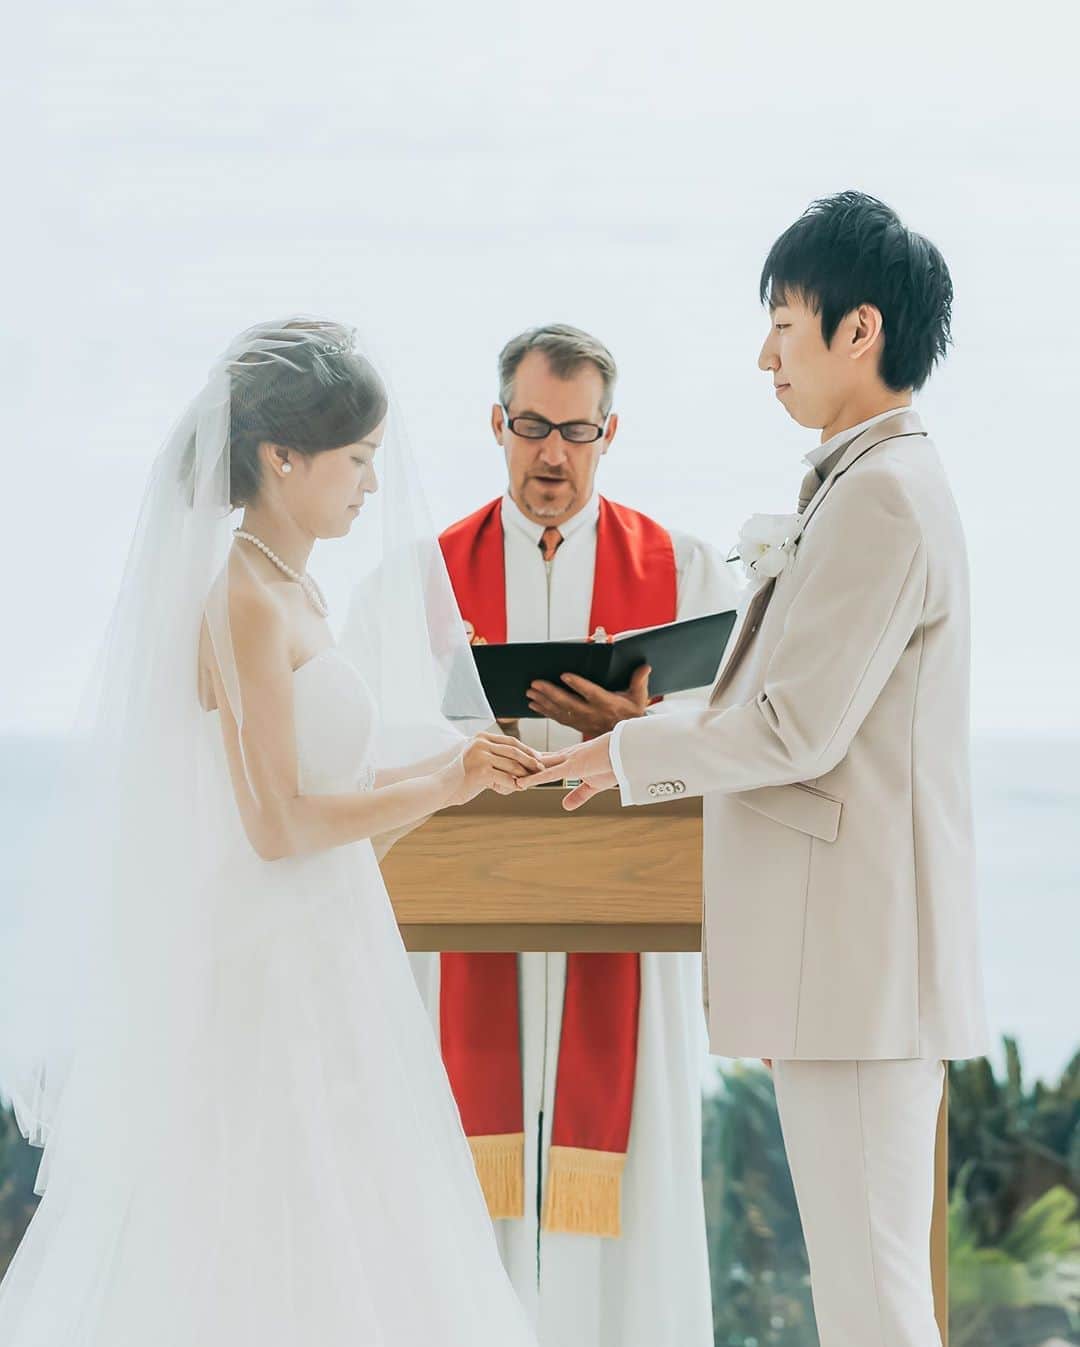 ARLUIS WEDDINGのインスタグラム